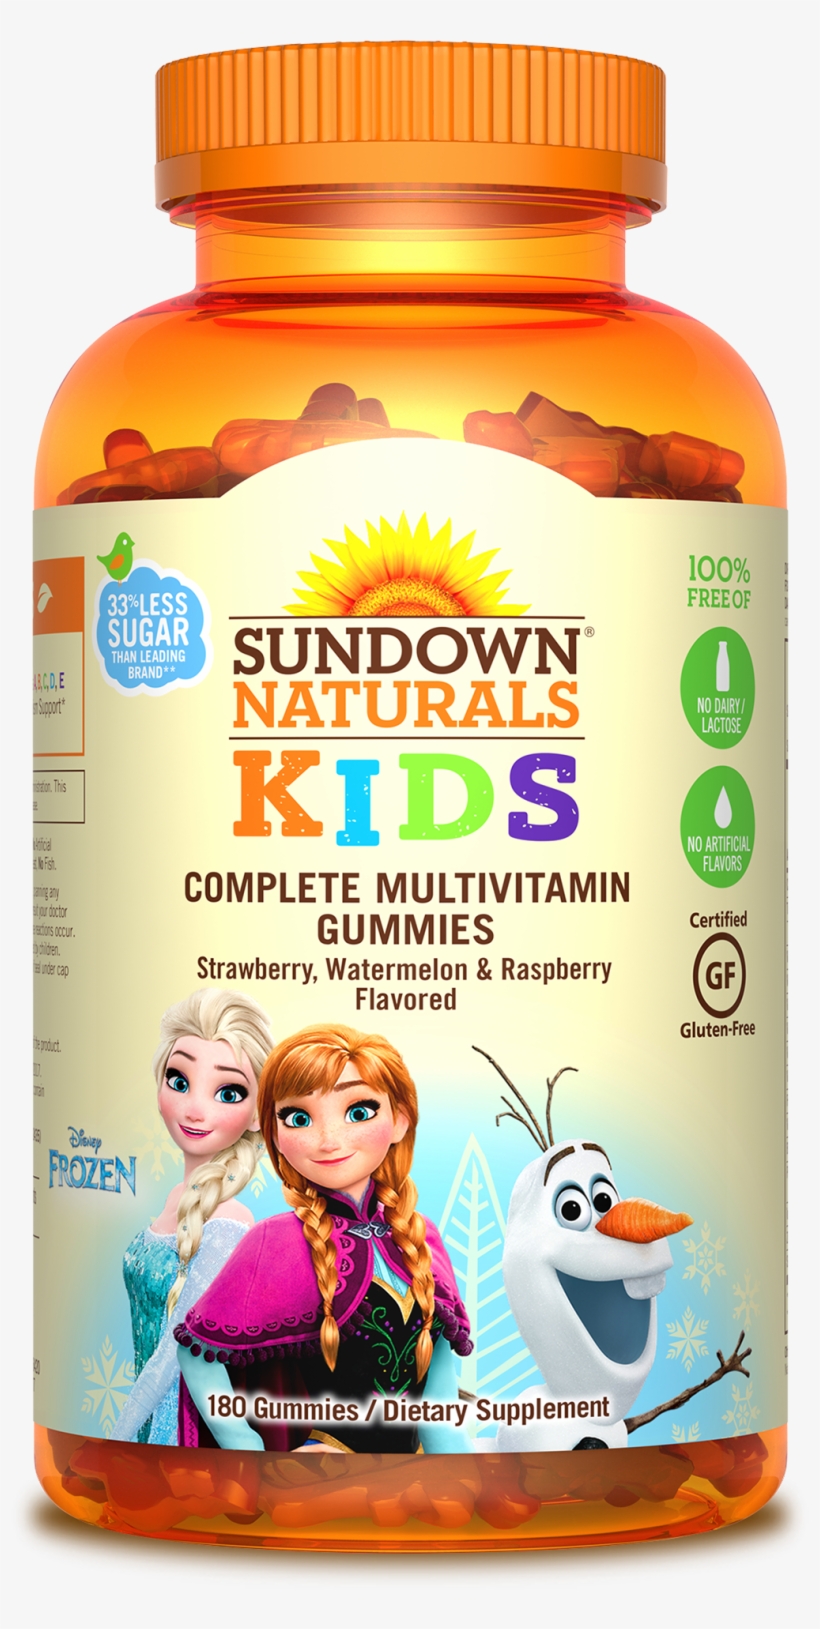 Frozen Complete Multivitamin - Sundown Naturals Kids, transparent png #3942336